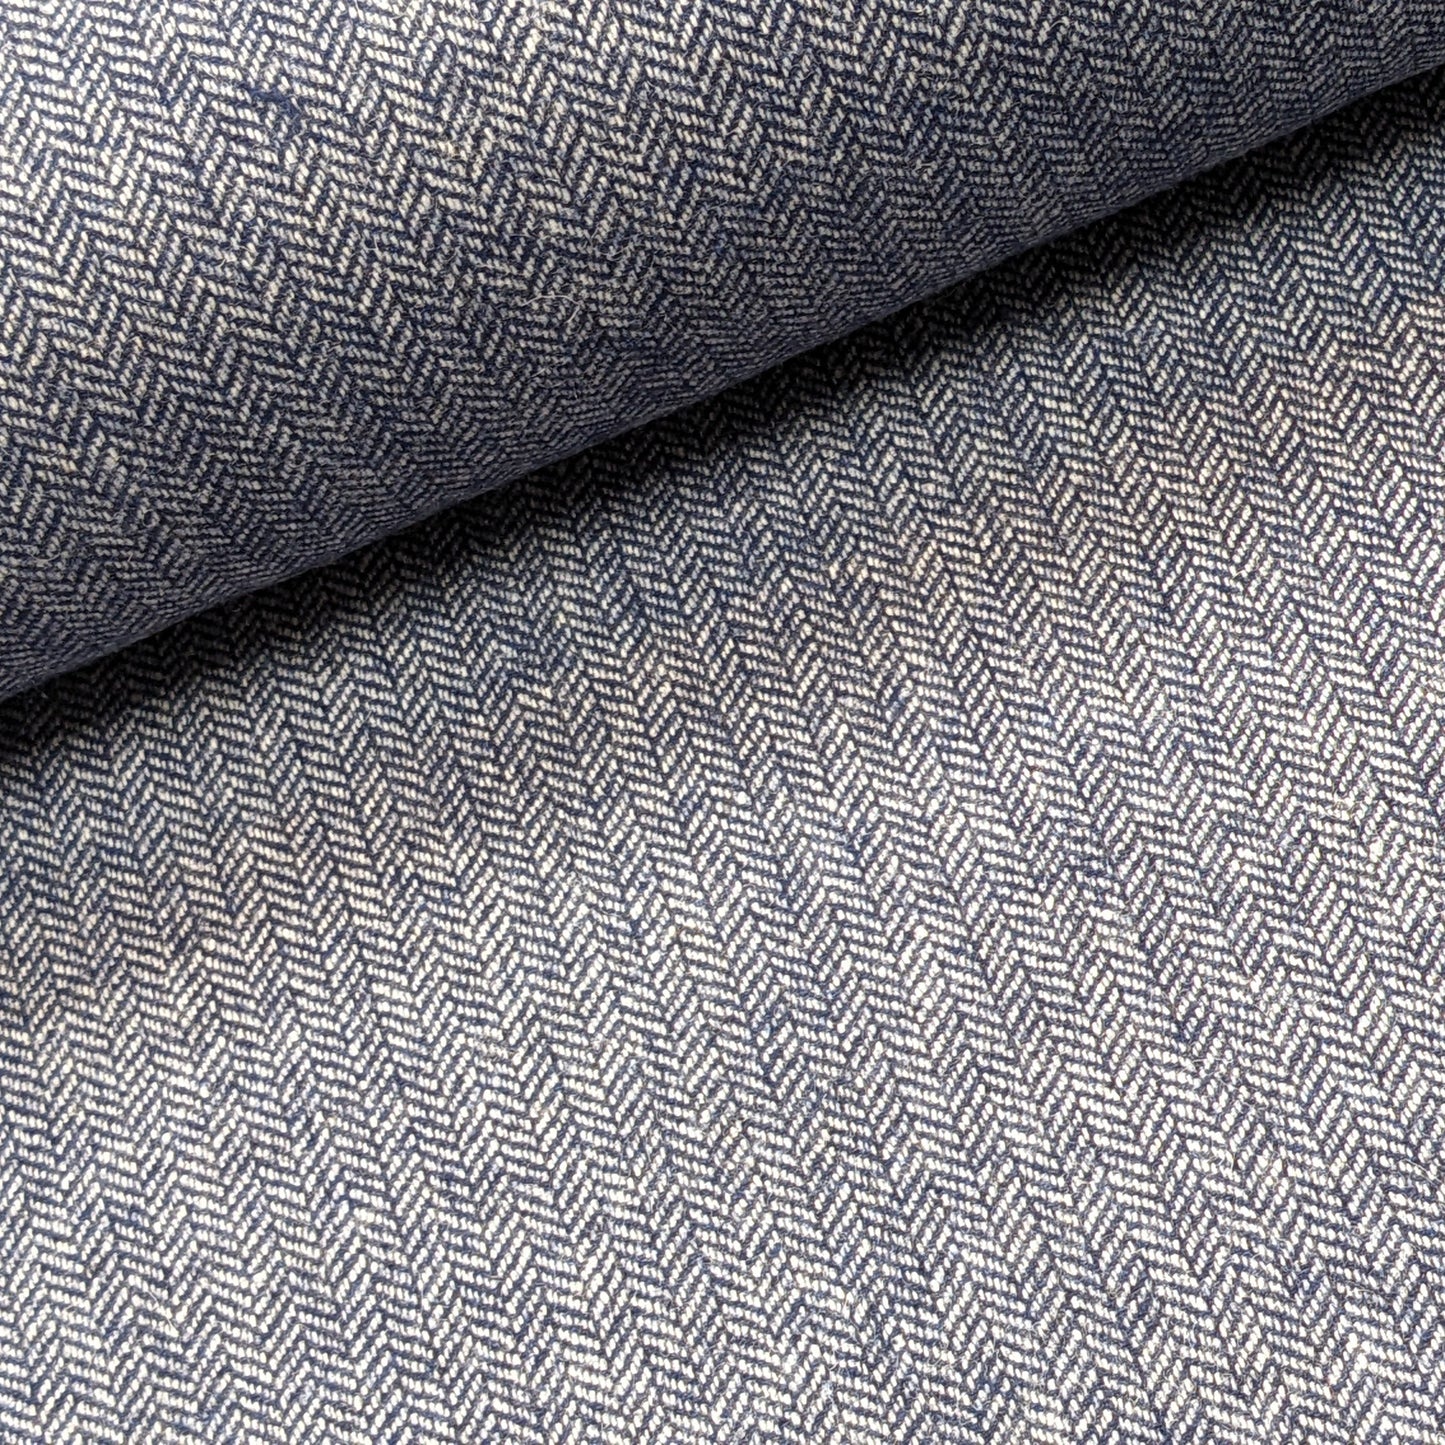 Wool and Polyester Herringbone Tweed Fabric - Denim Blue